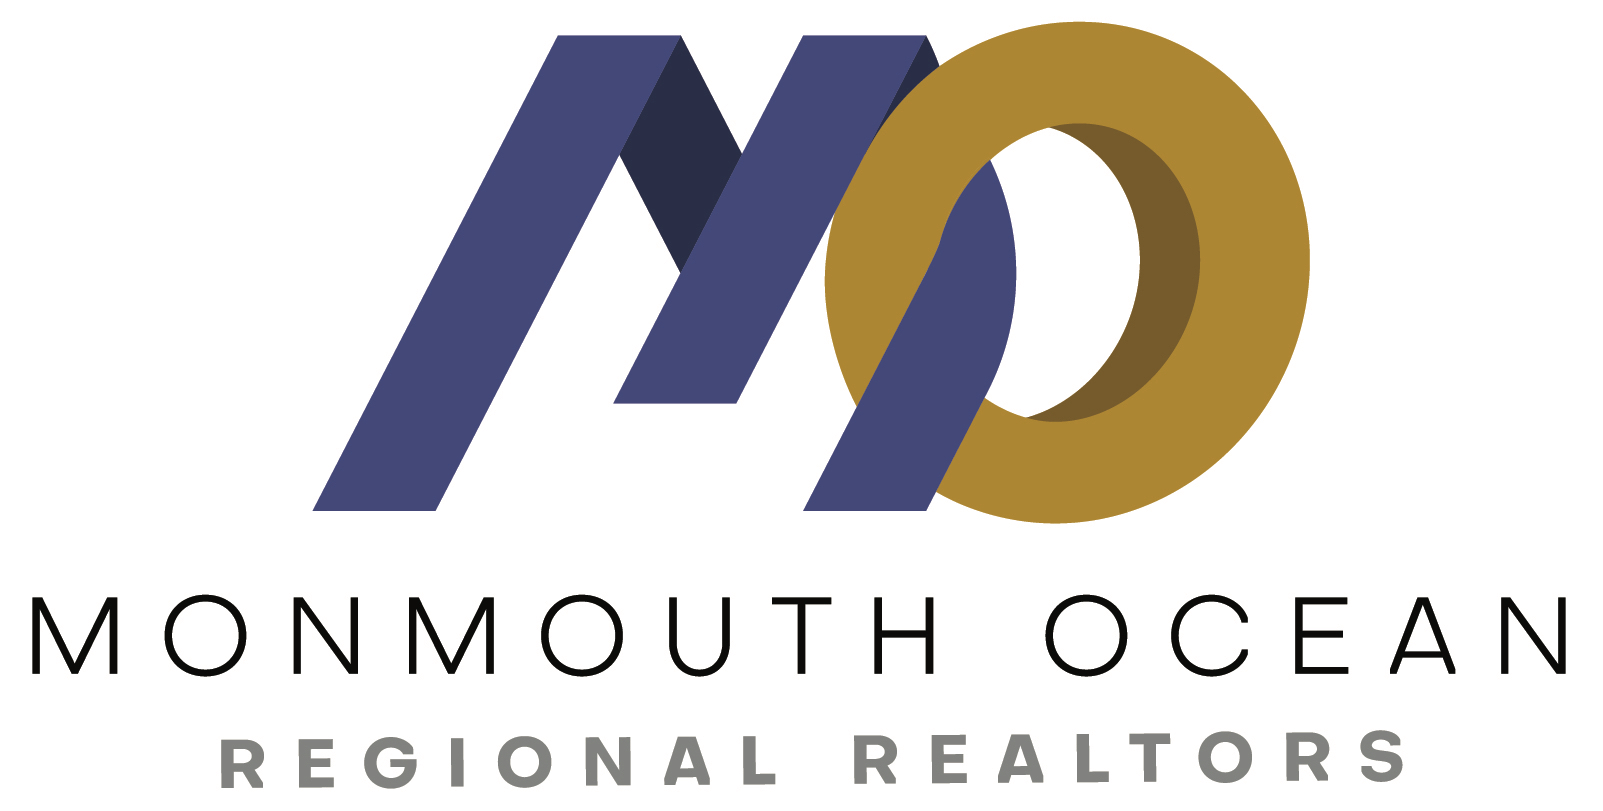 Monmouth Ocean Regional Realtors